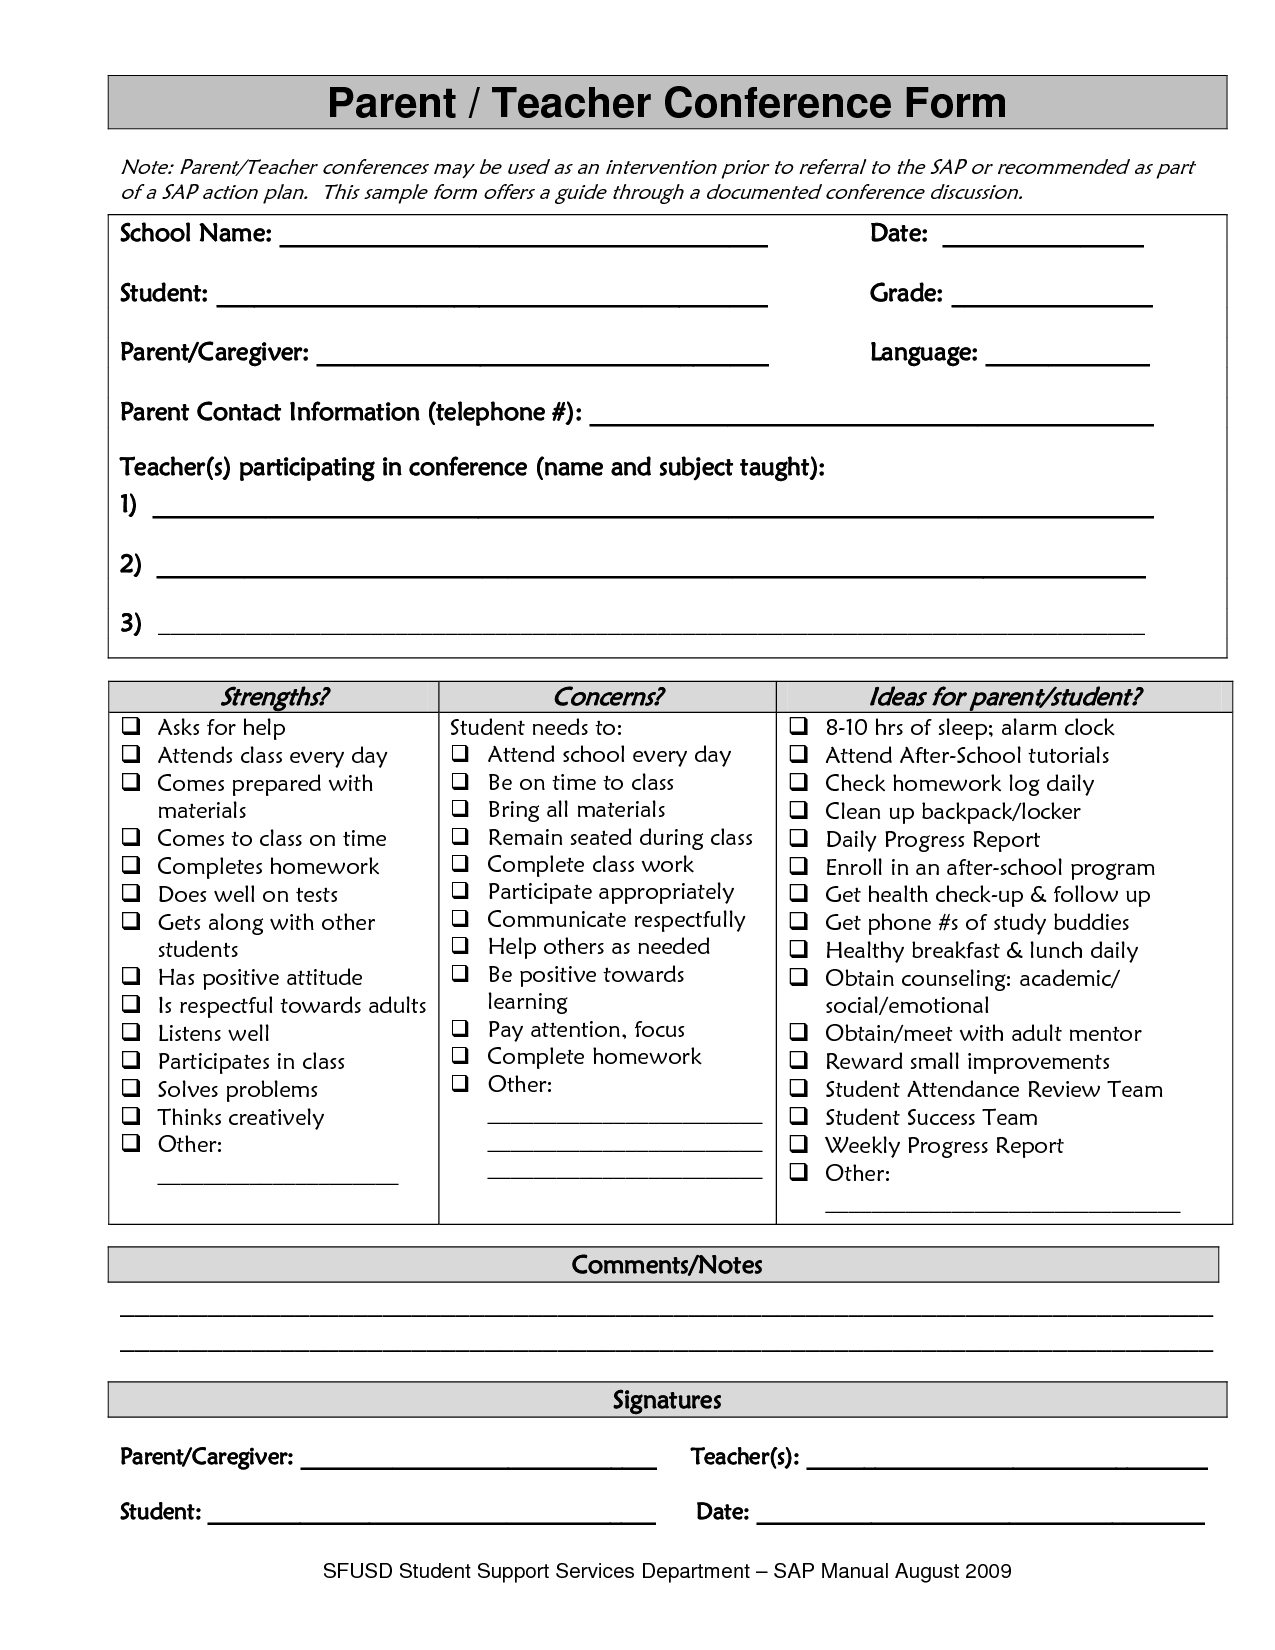 Behavior Letter to Parents From Teacher Template - Sample Parent Teacher Conference form Parent Teacher Conference form